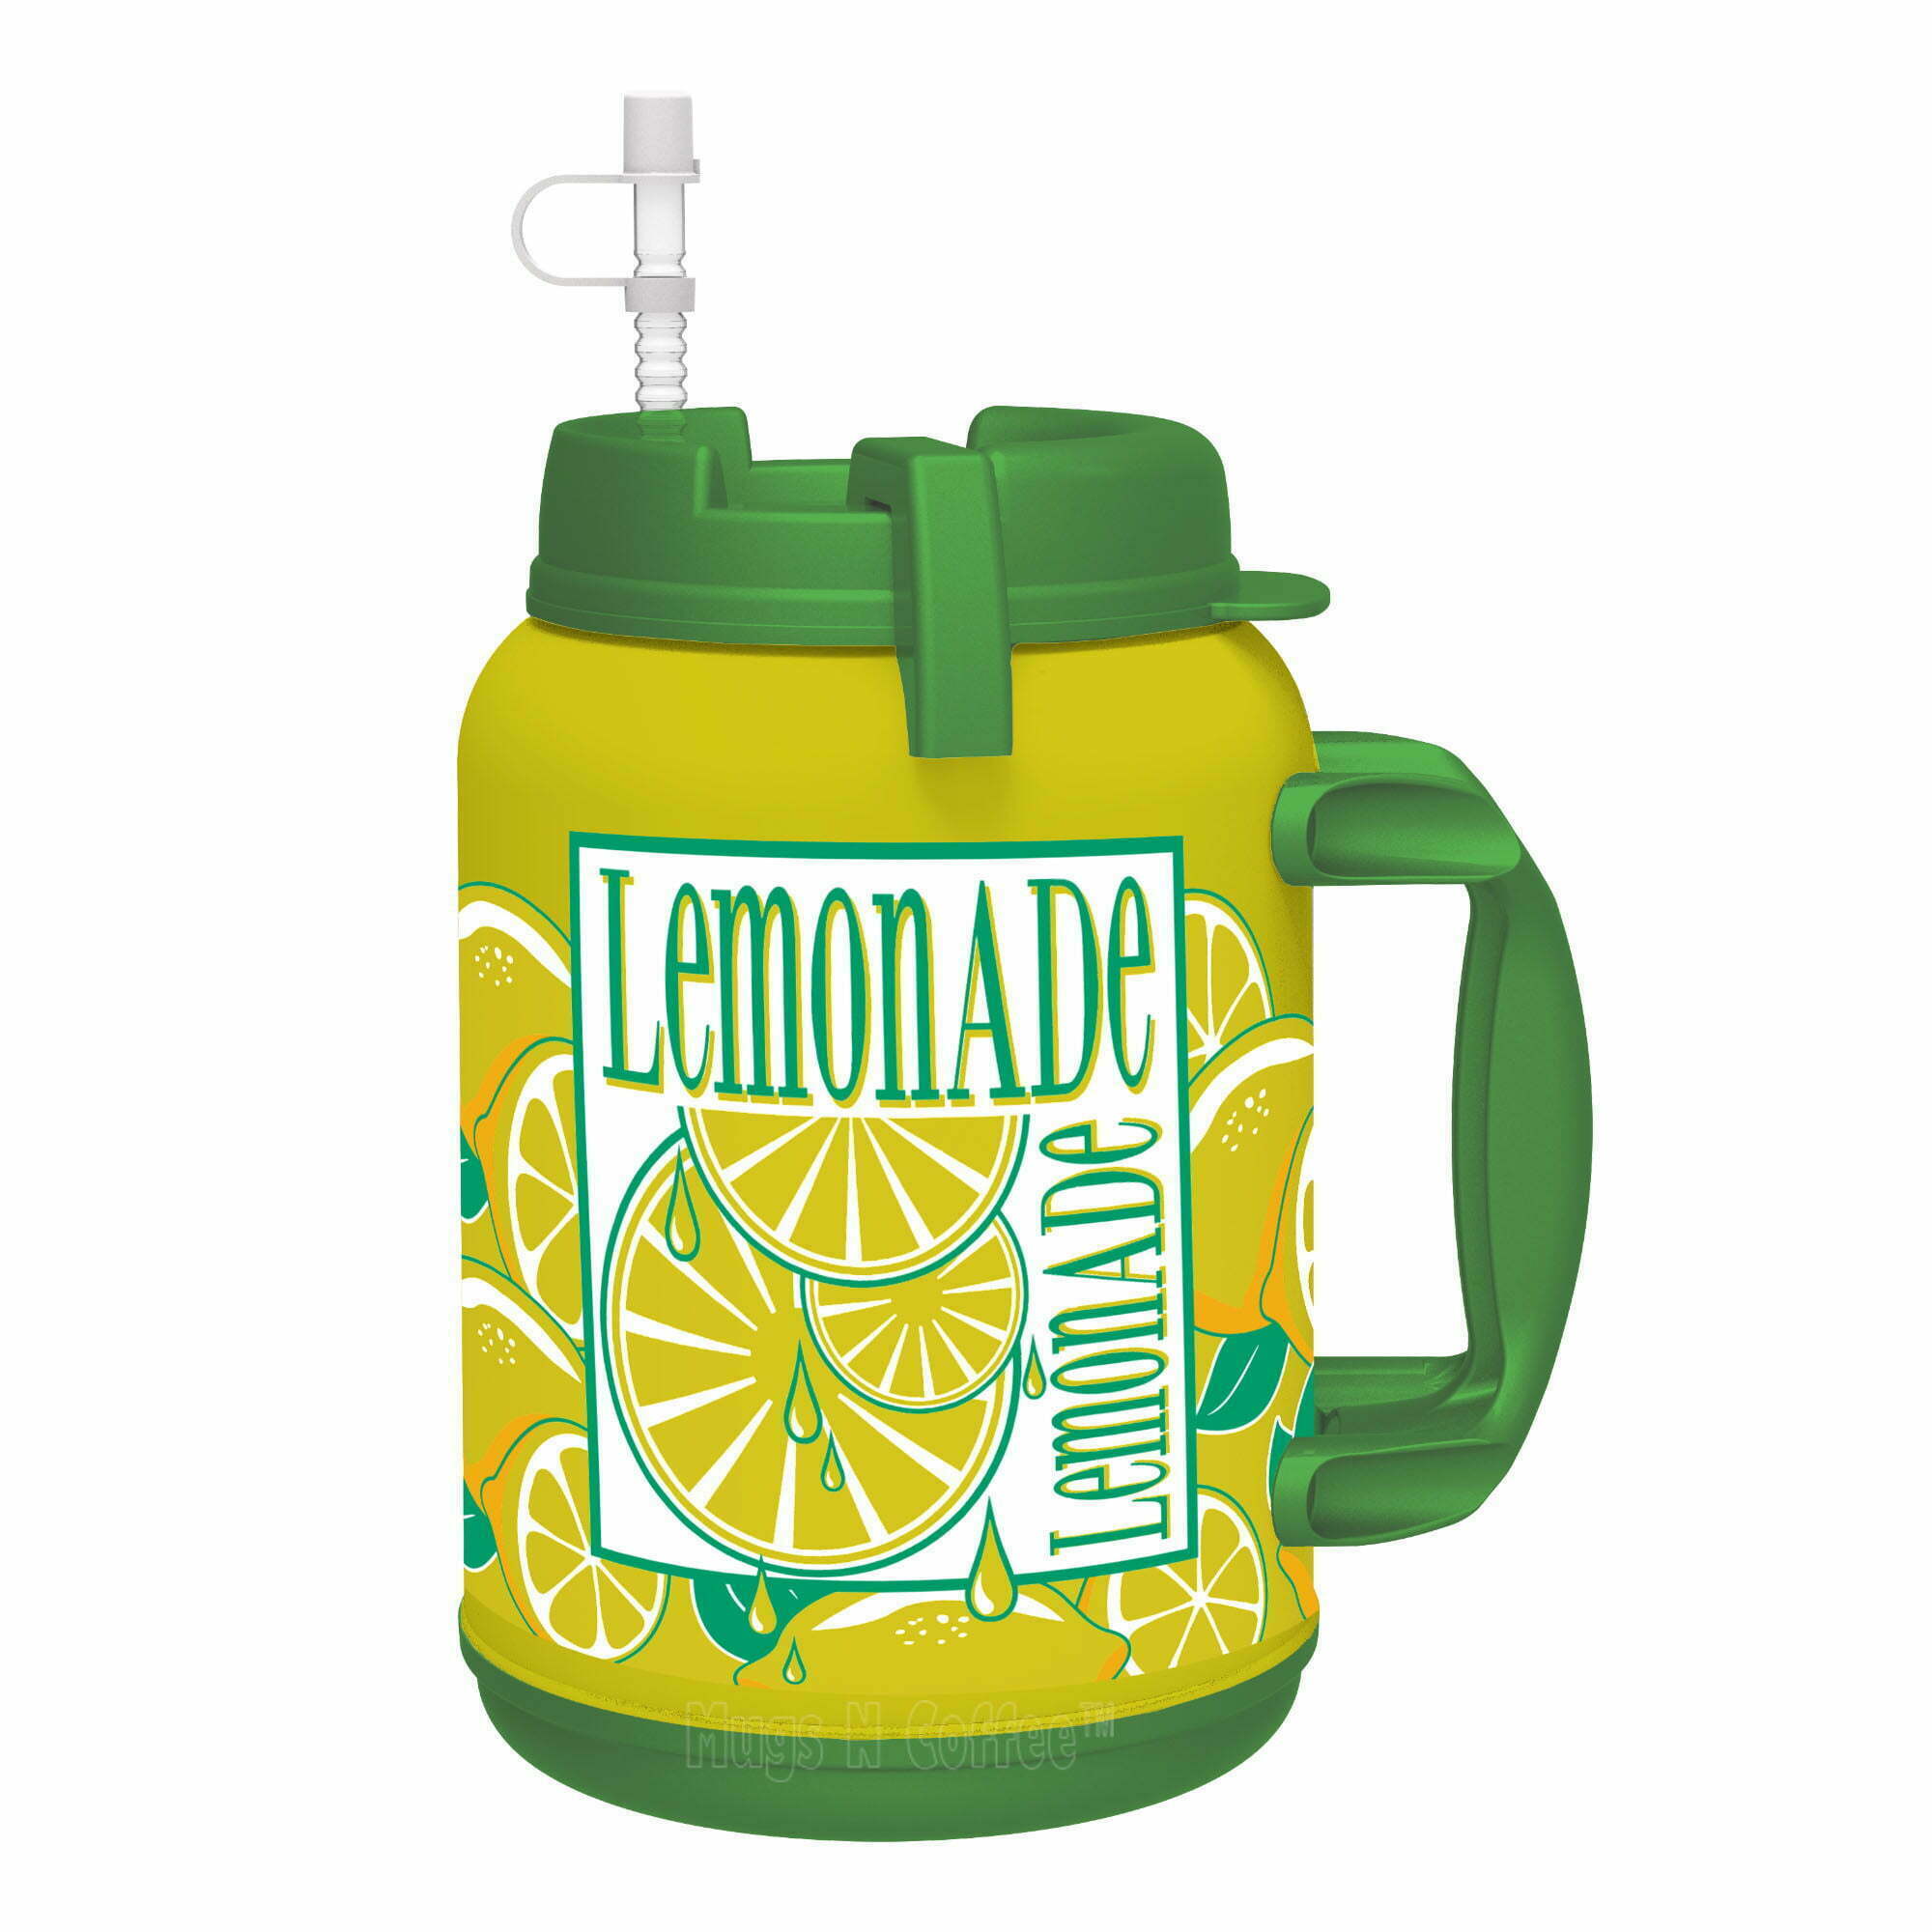 64 oz Lemonade Insulated Mug - Travel Mug with Large Carry Handle and Straw